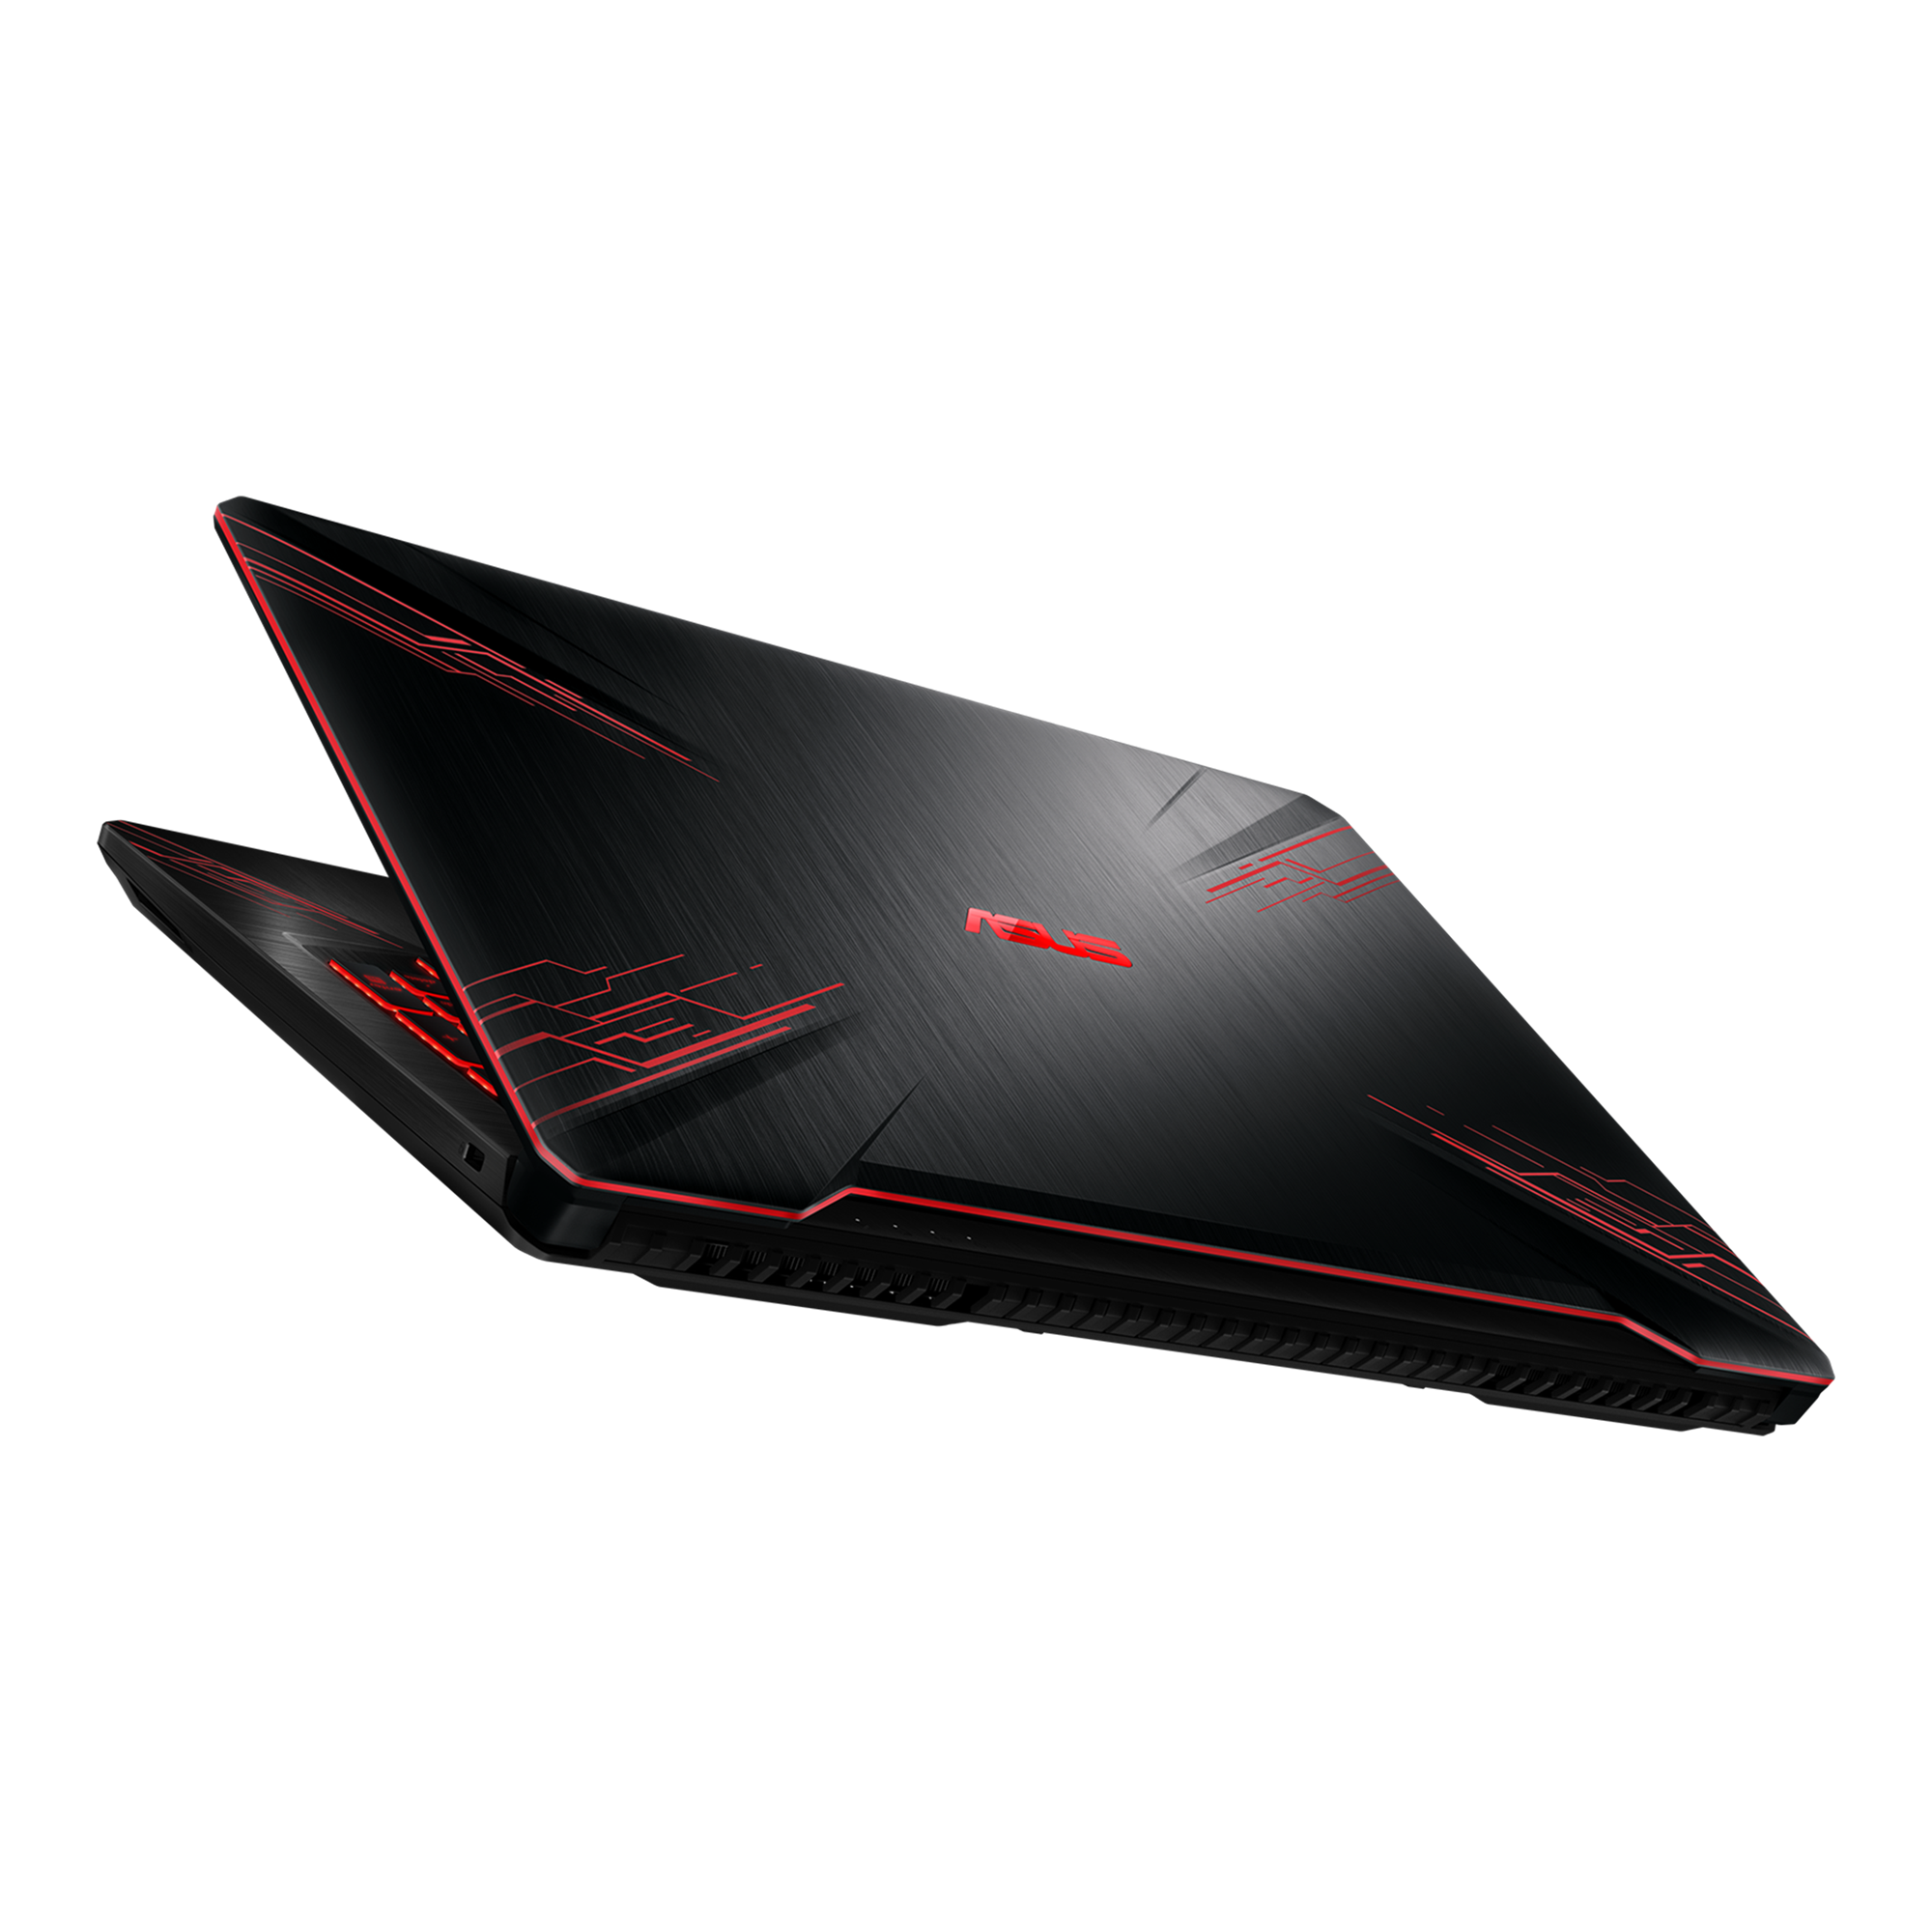 Asus Tuf Gaming Fx504｜Laptops For Gaming｜Asus Hong Kong